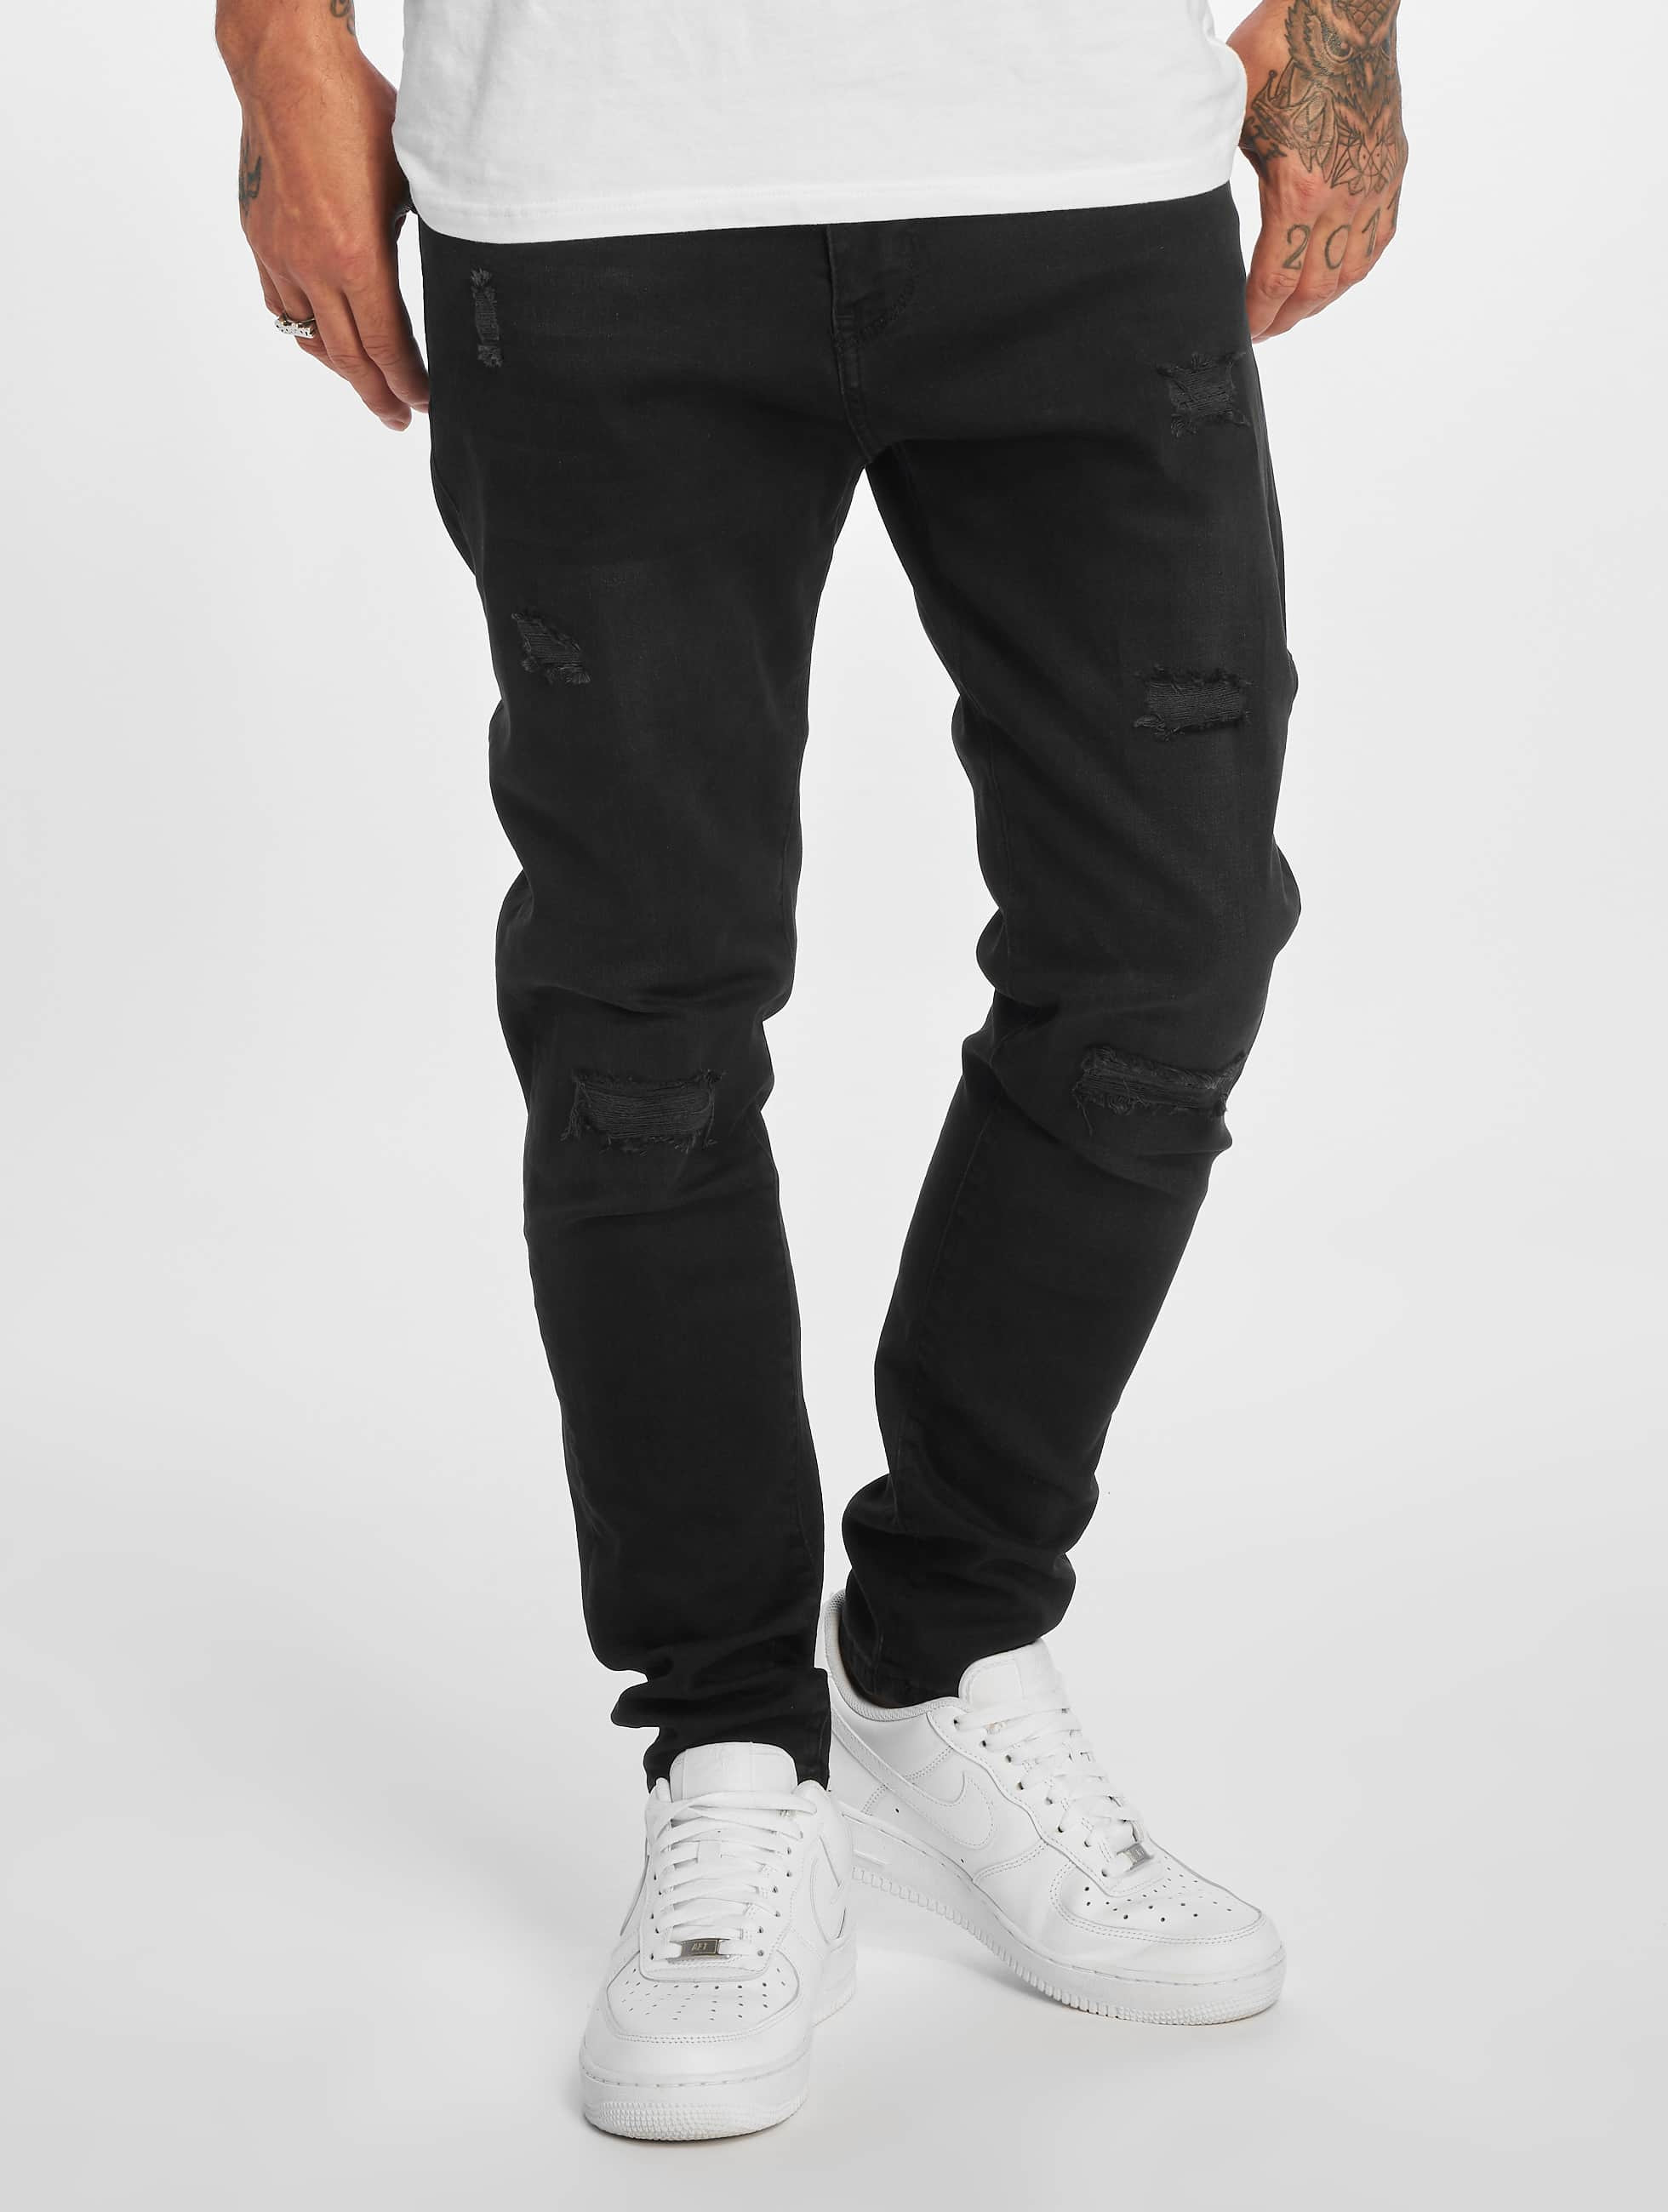 DEF Jeans / Fit Jeans Burundi black 683061